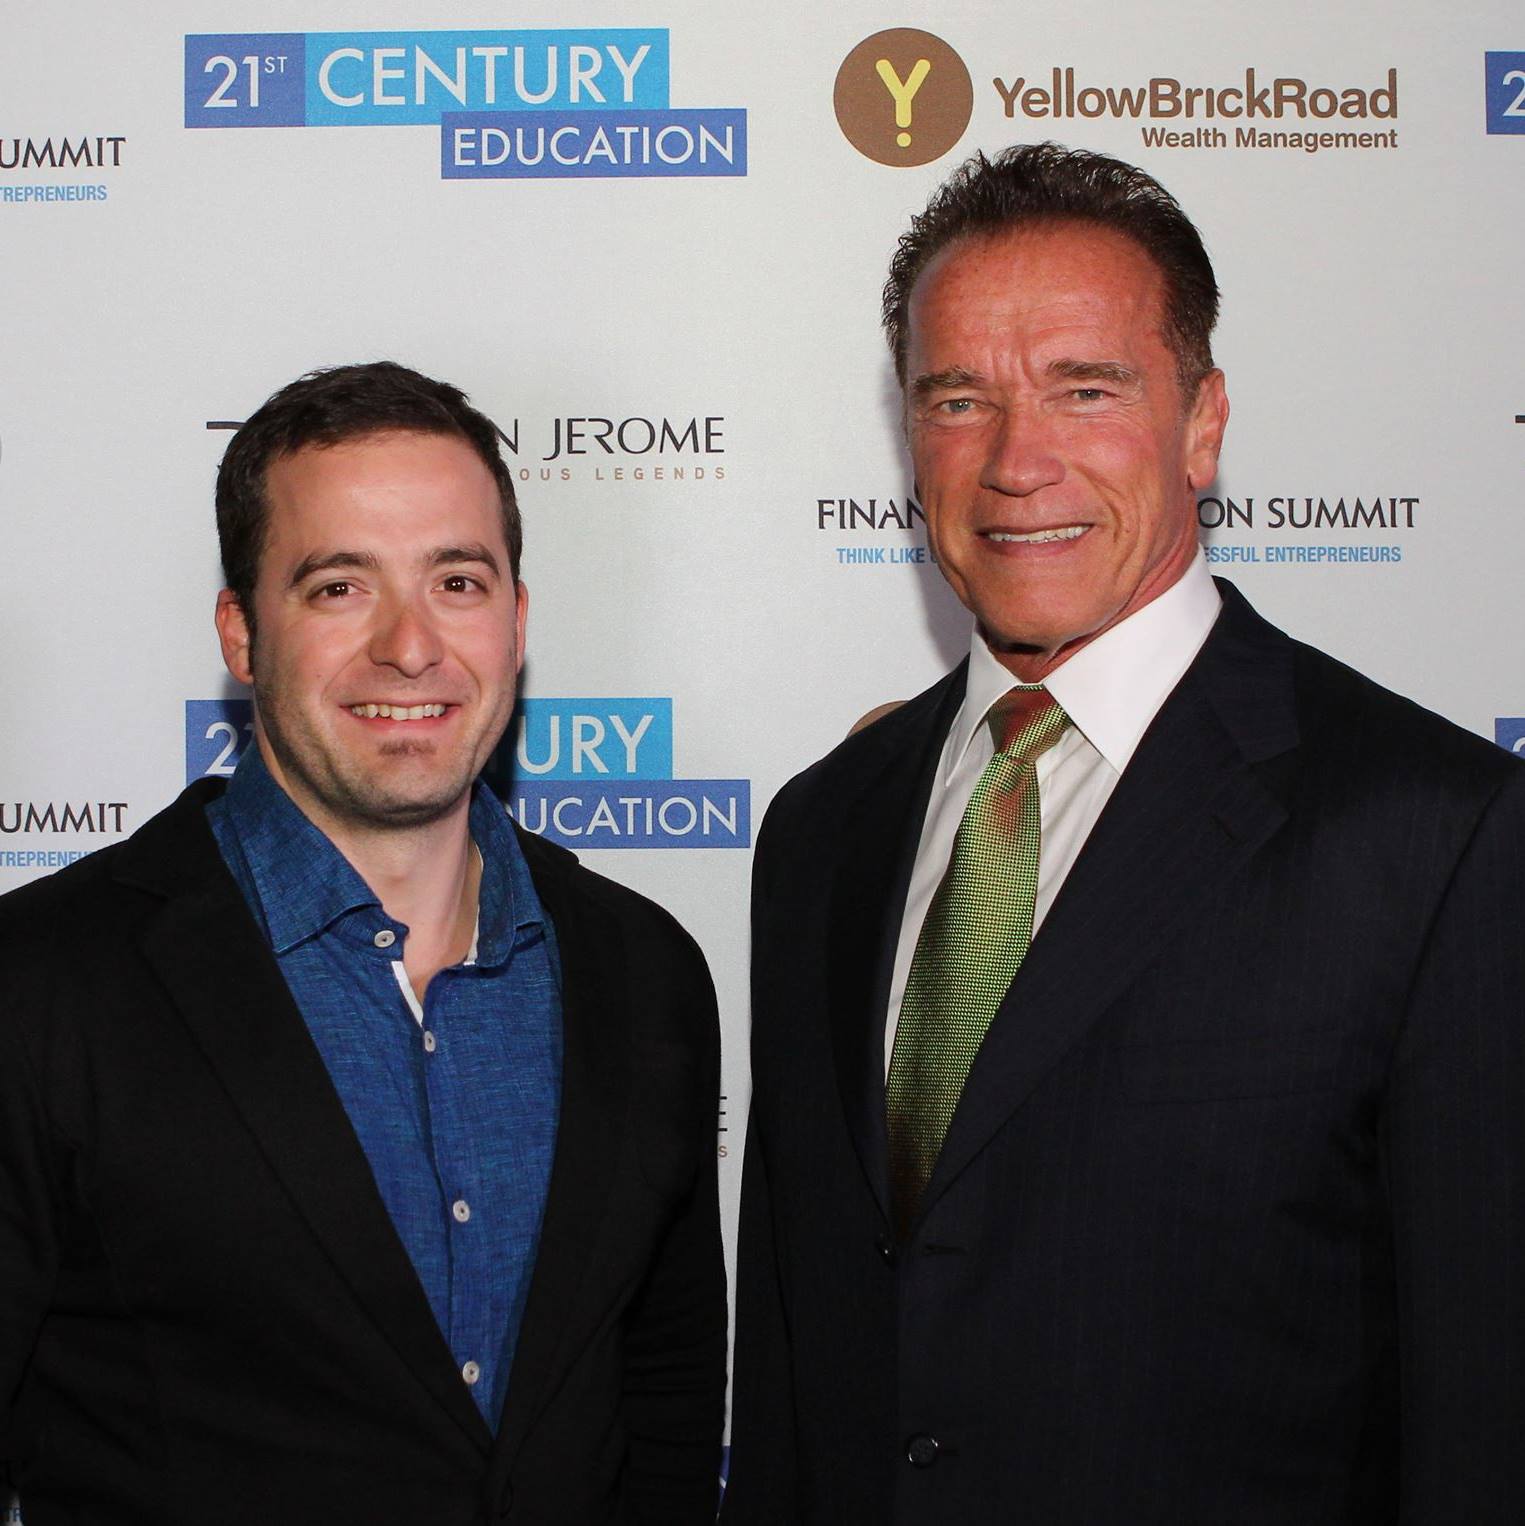 Meeting Arnold Schwarzenegger